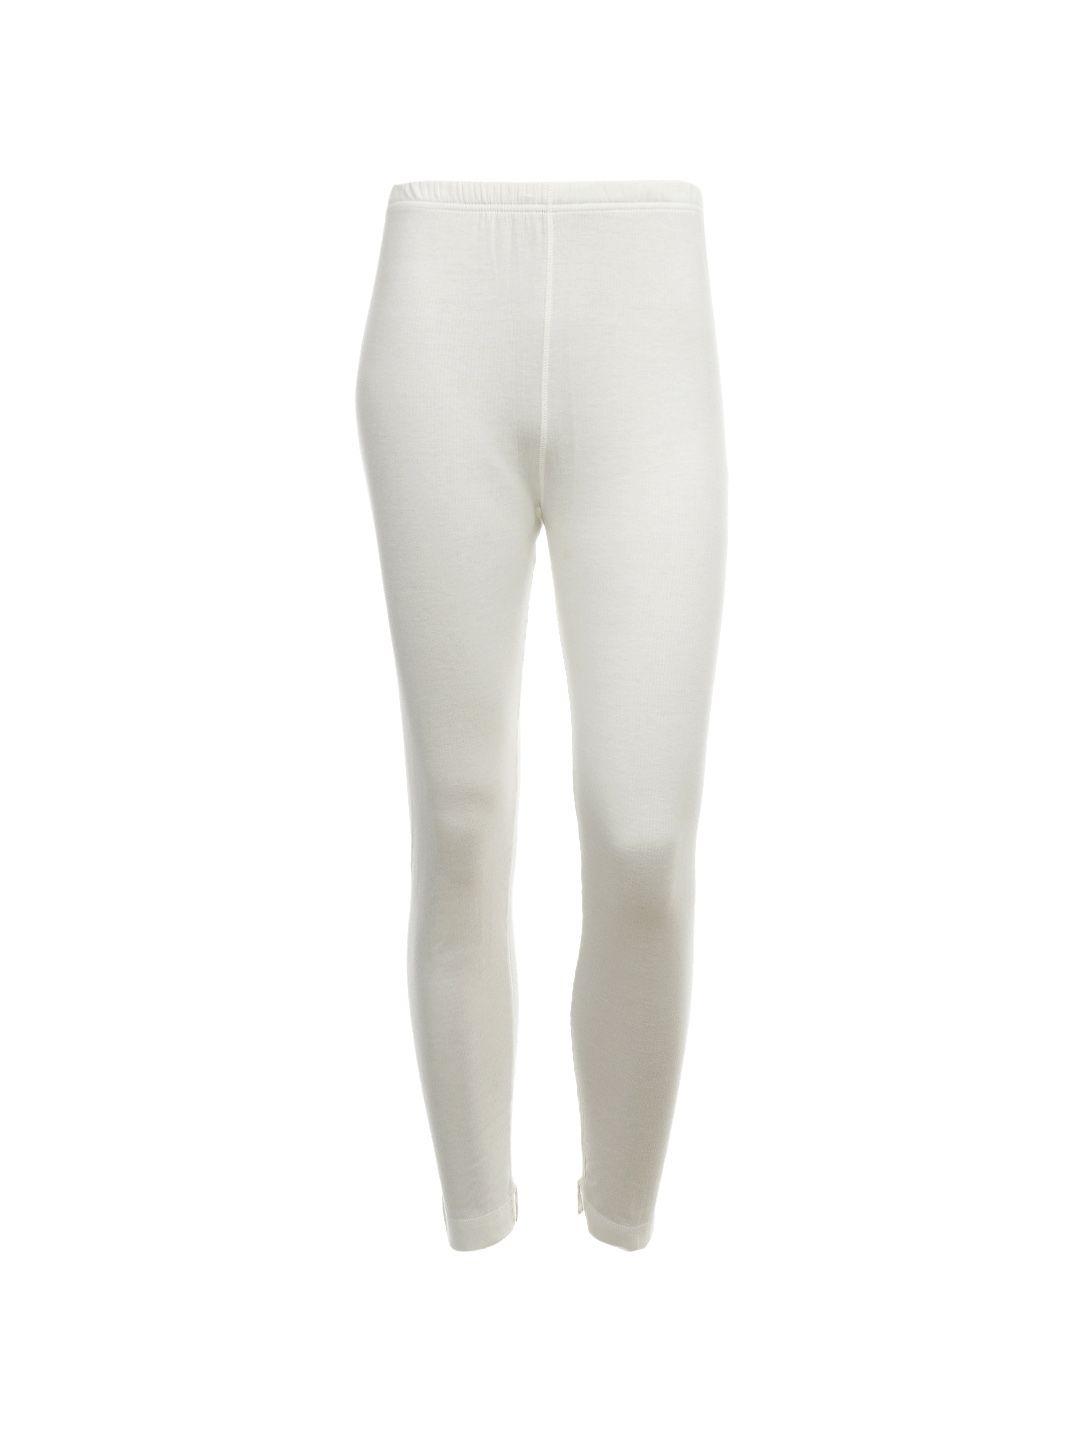 jockey women off-white thermal leggings